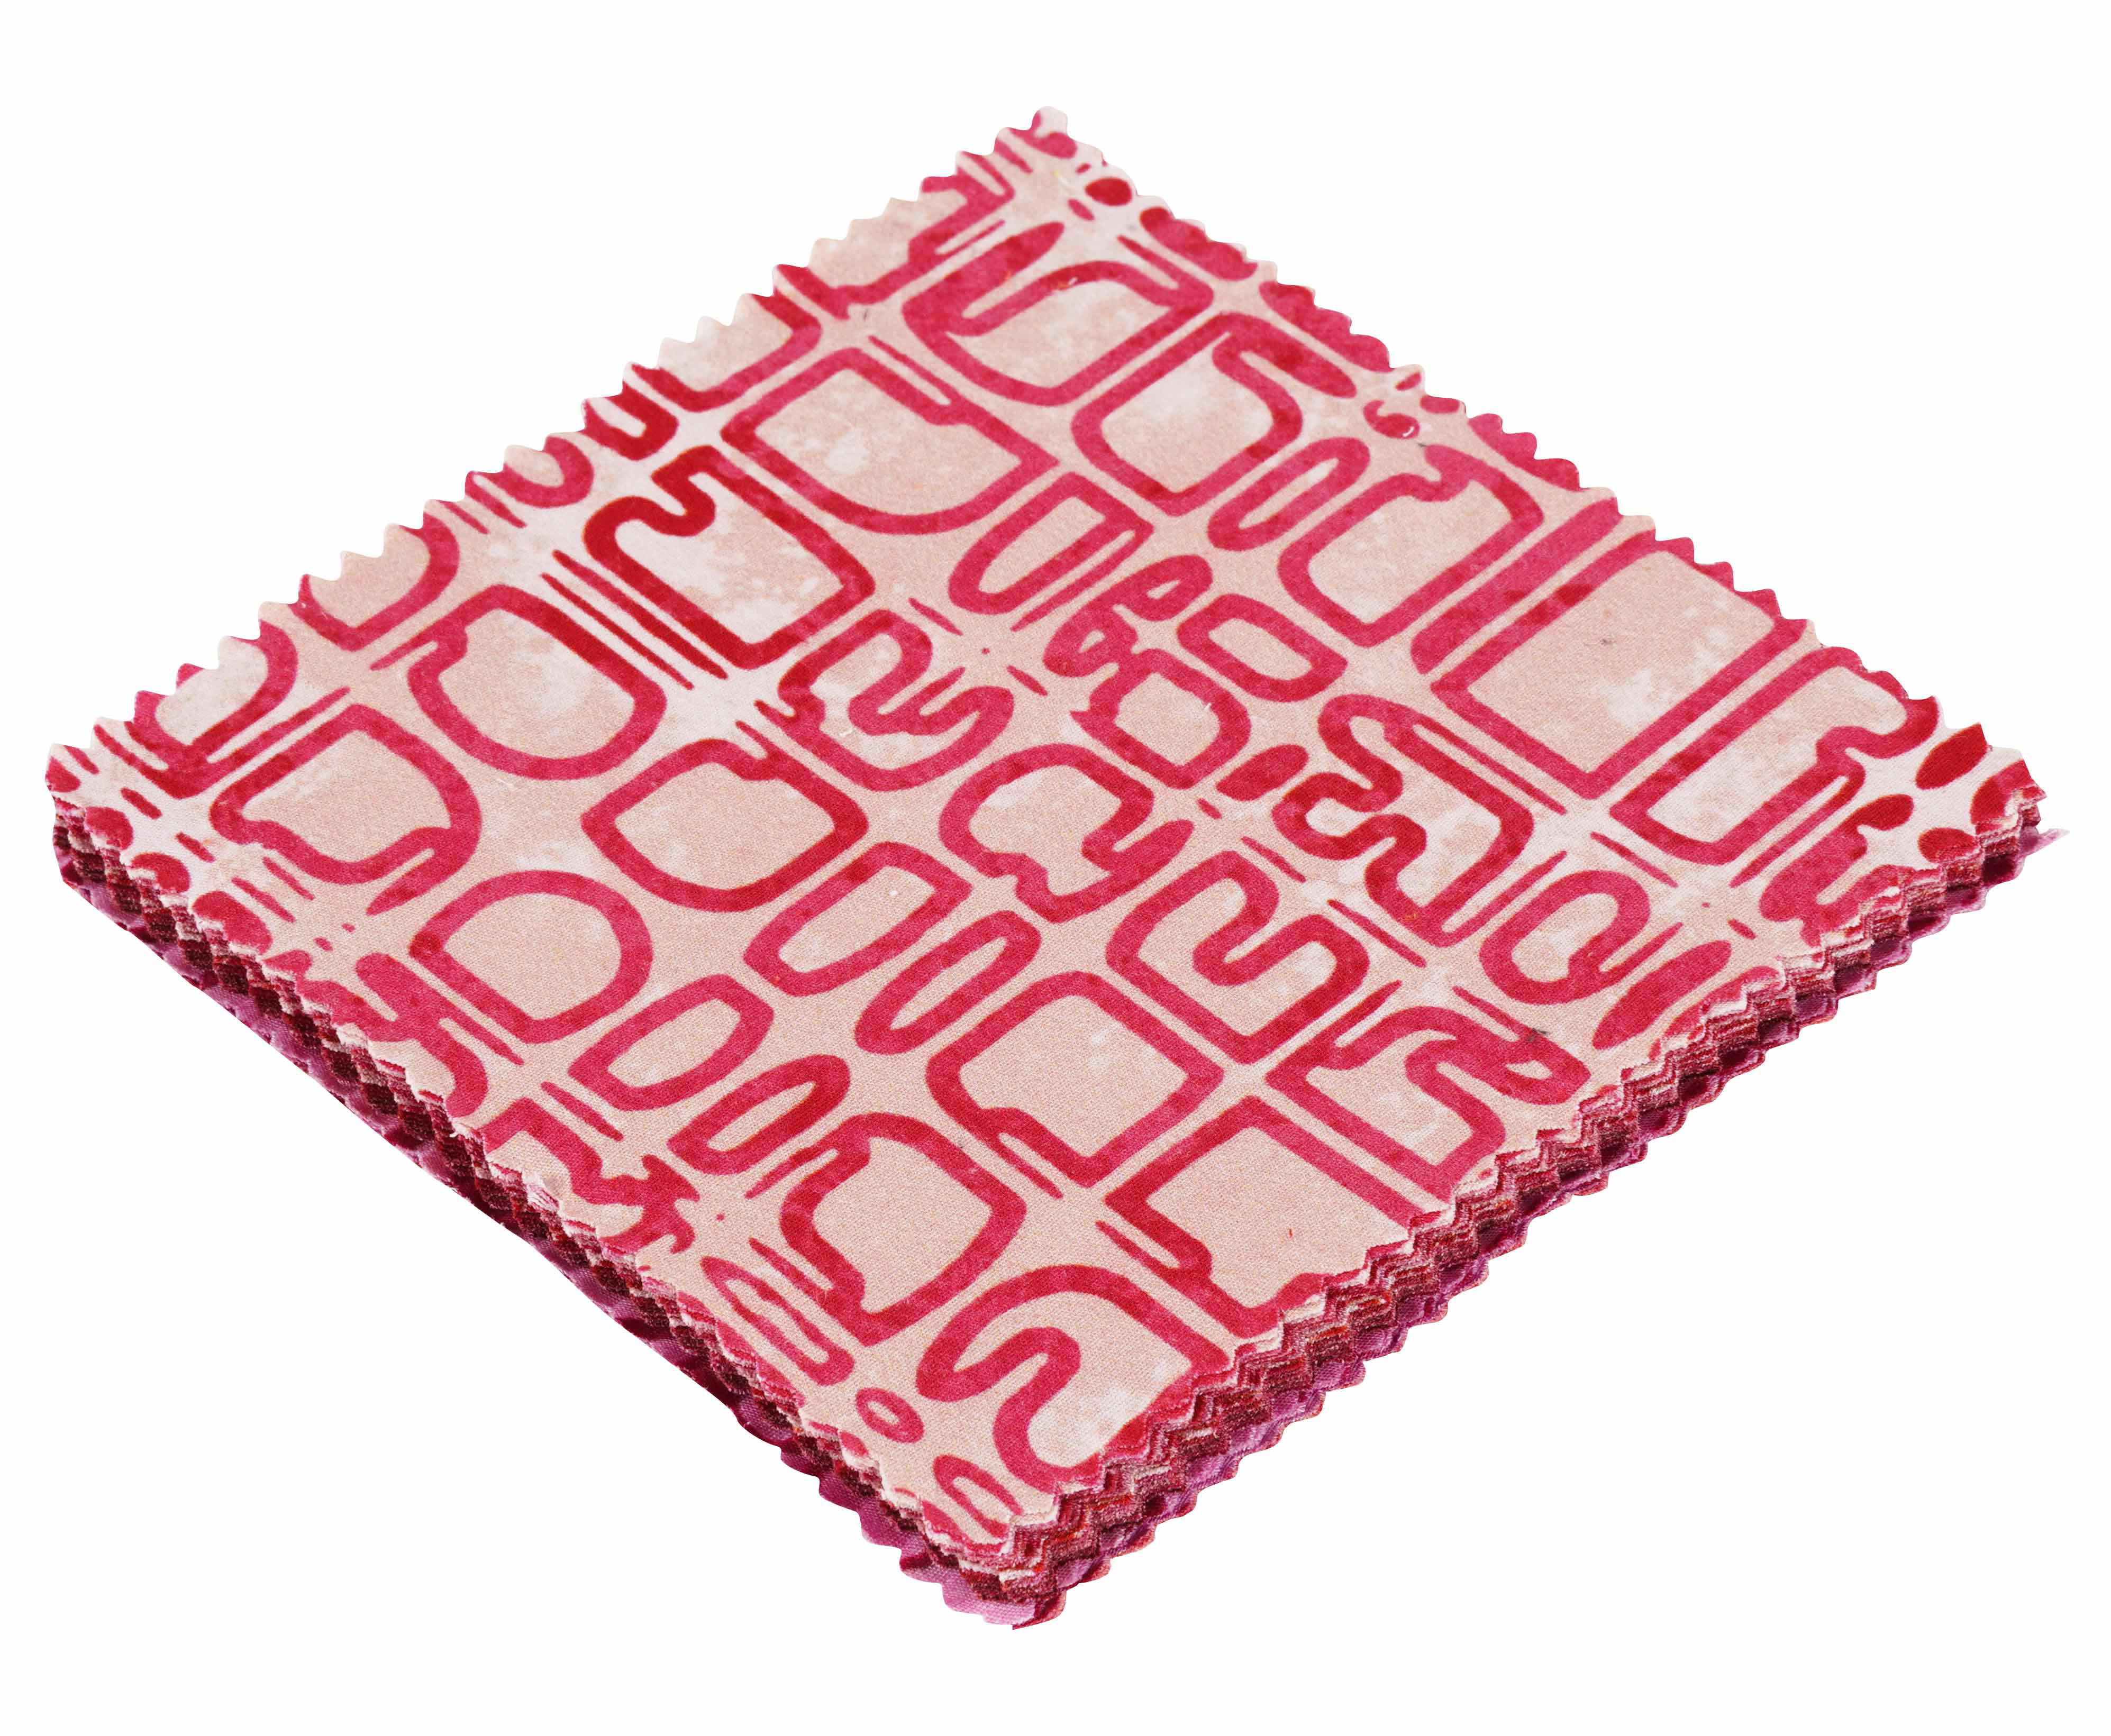 Soimoi Batik Print Precut 5-inch Cotton Fabric Quilting Squares Charm Pack  DIY Patchwork Sewing Craft